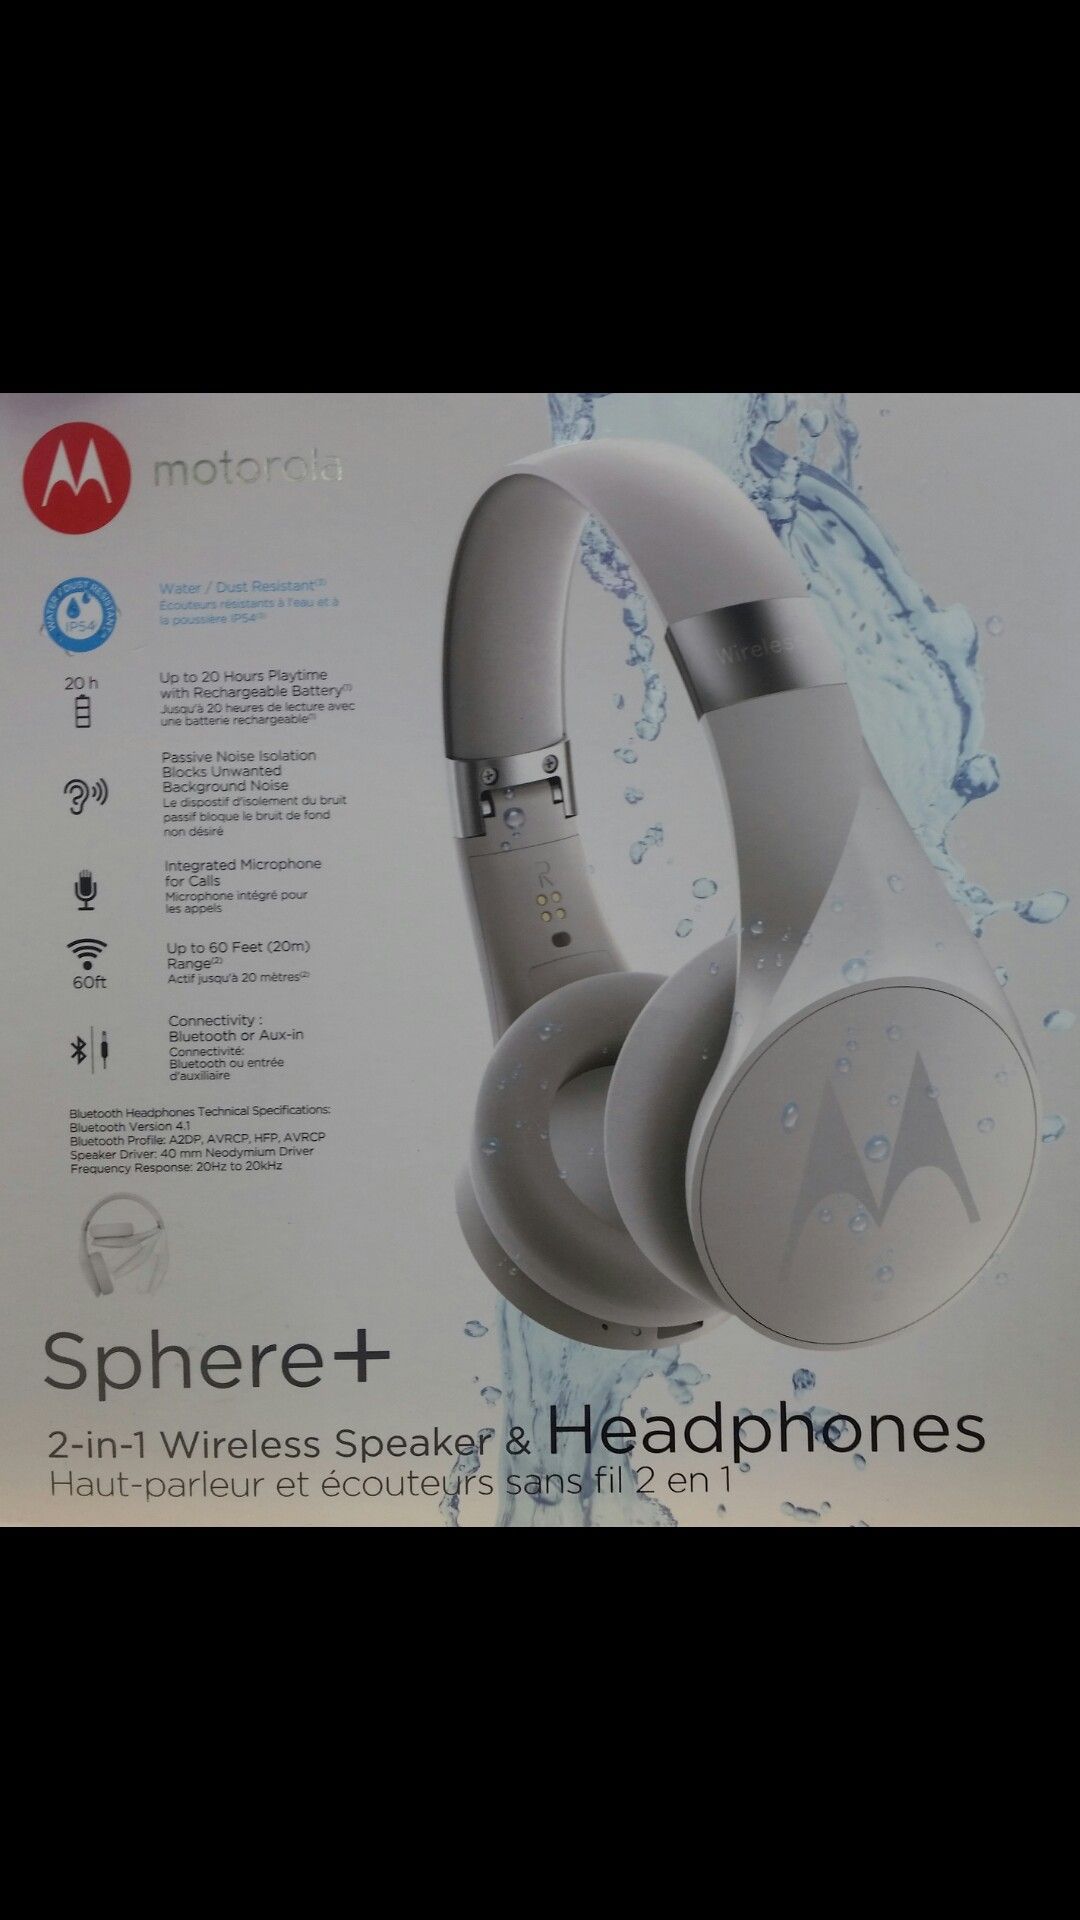 Motorola Sphere+ Bluetooth speaker/Headphone